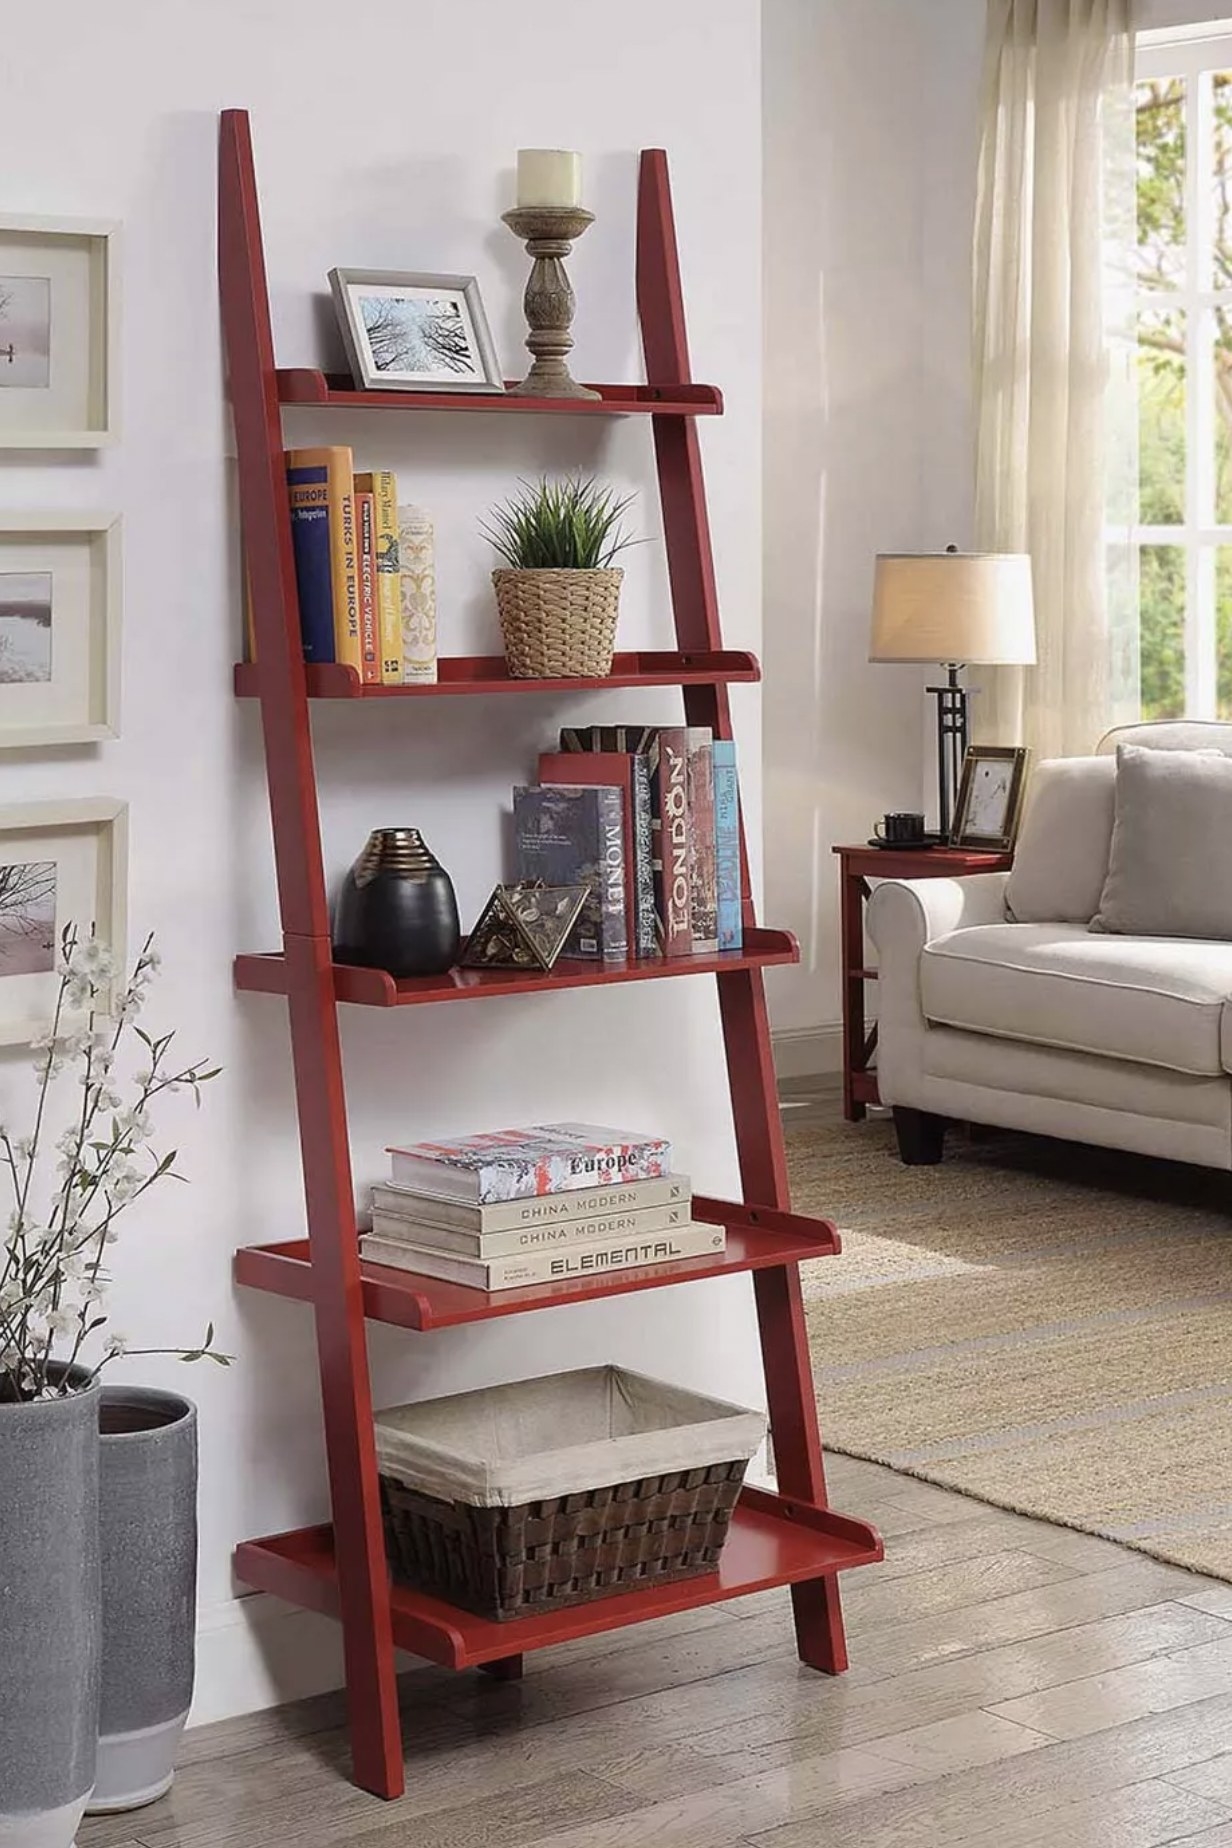 The red ladder shelf